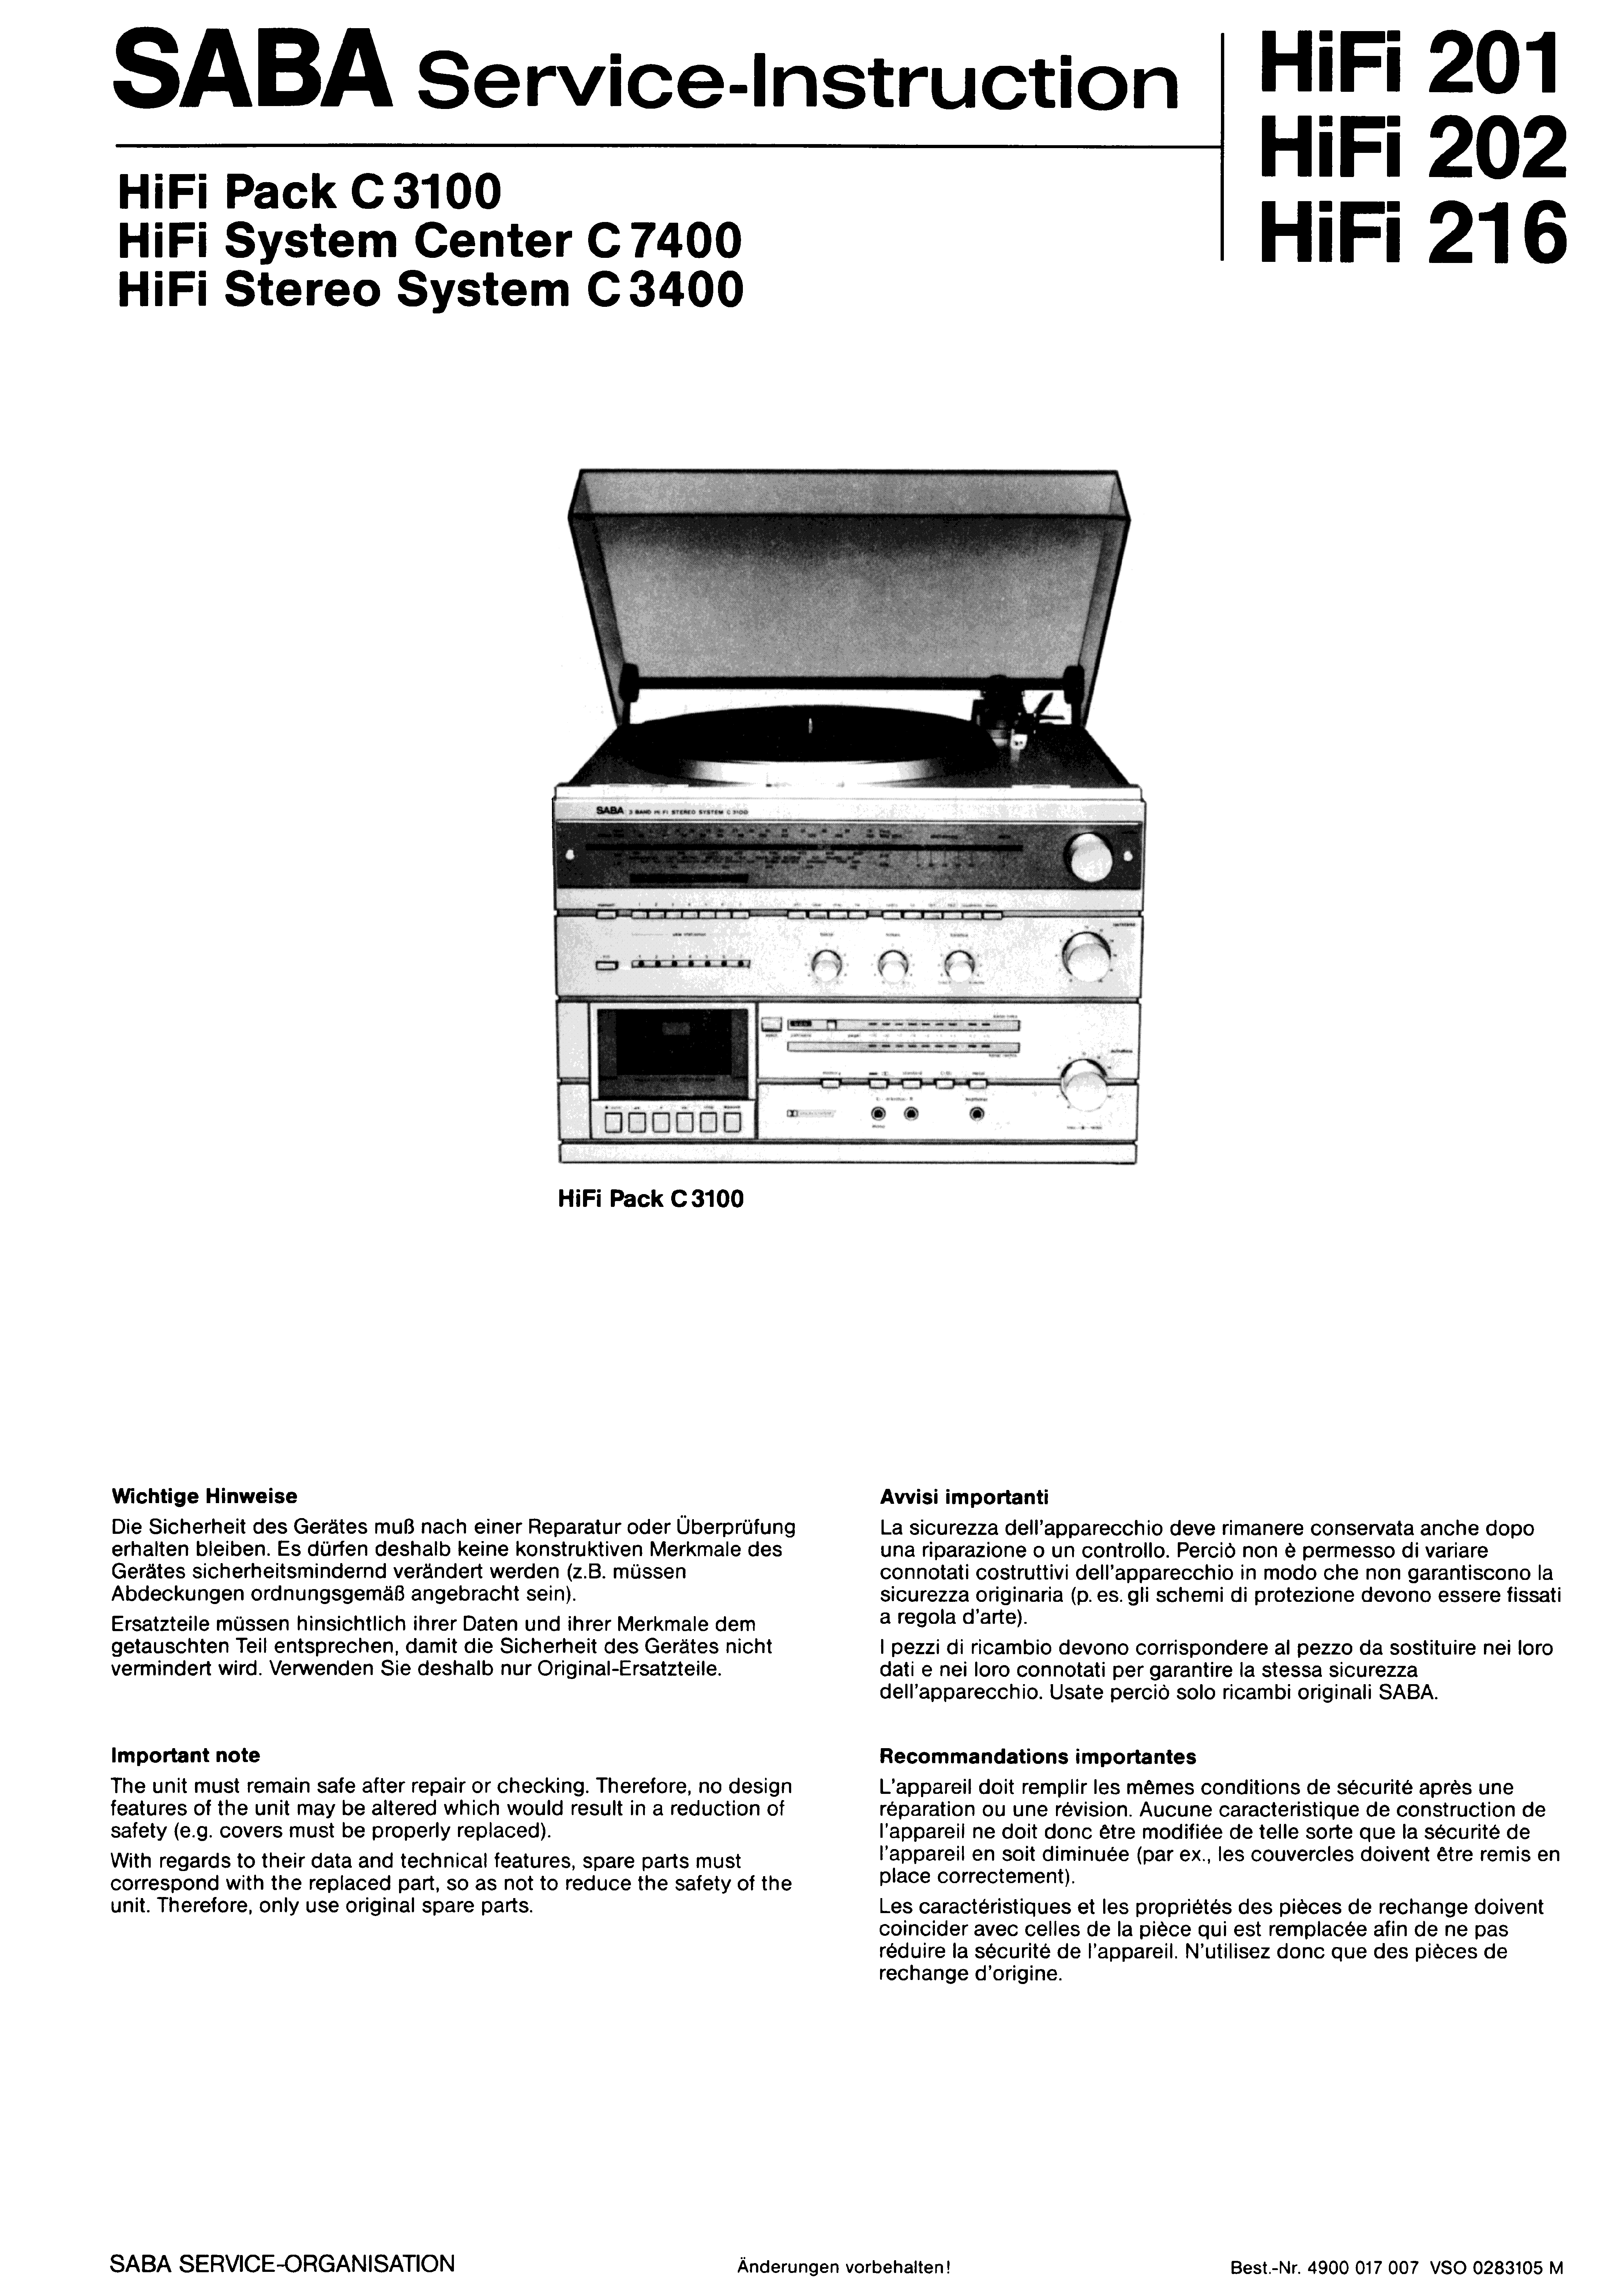 SABA HIFI PACK C 3100 SM service manual (1st page)